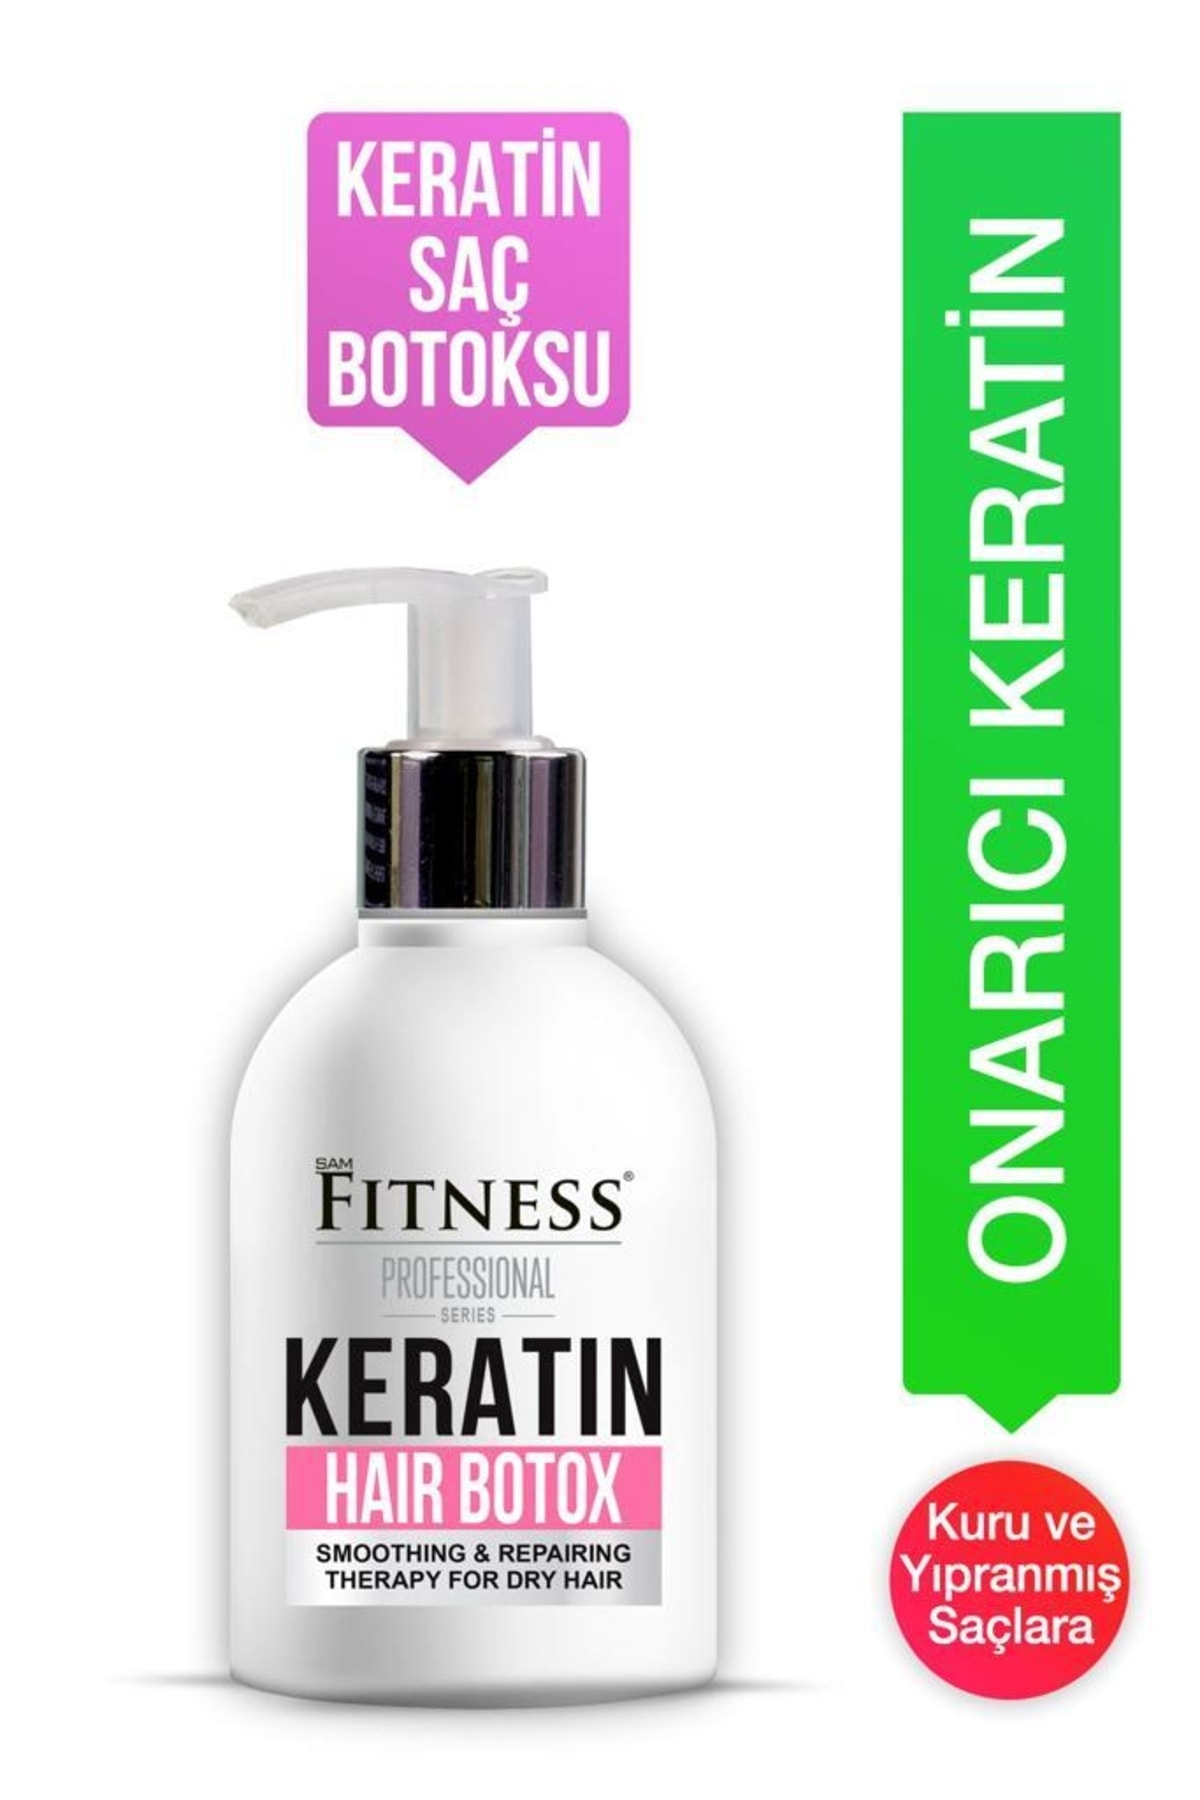 Fitness Professional Keratin Hair Botox 250 ml Fiyatı - Trendyol